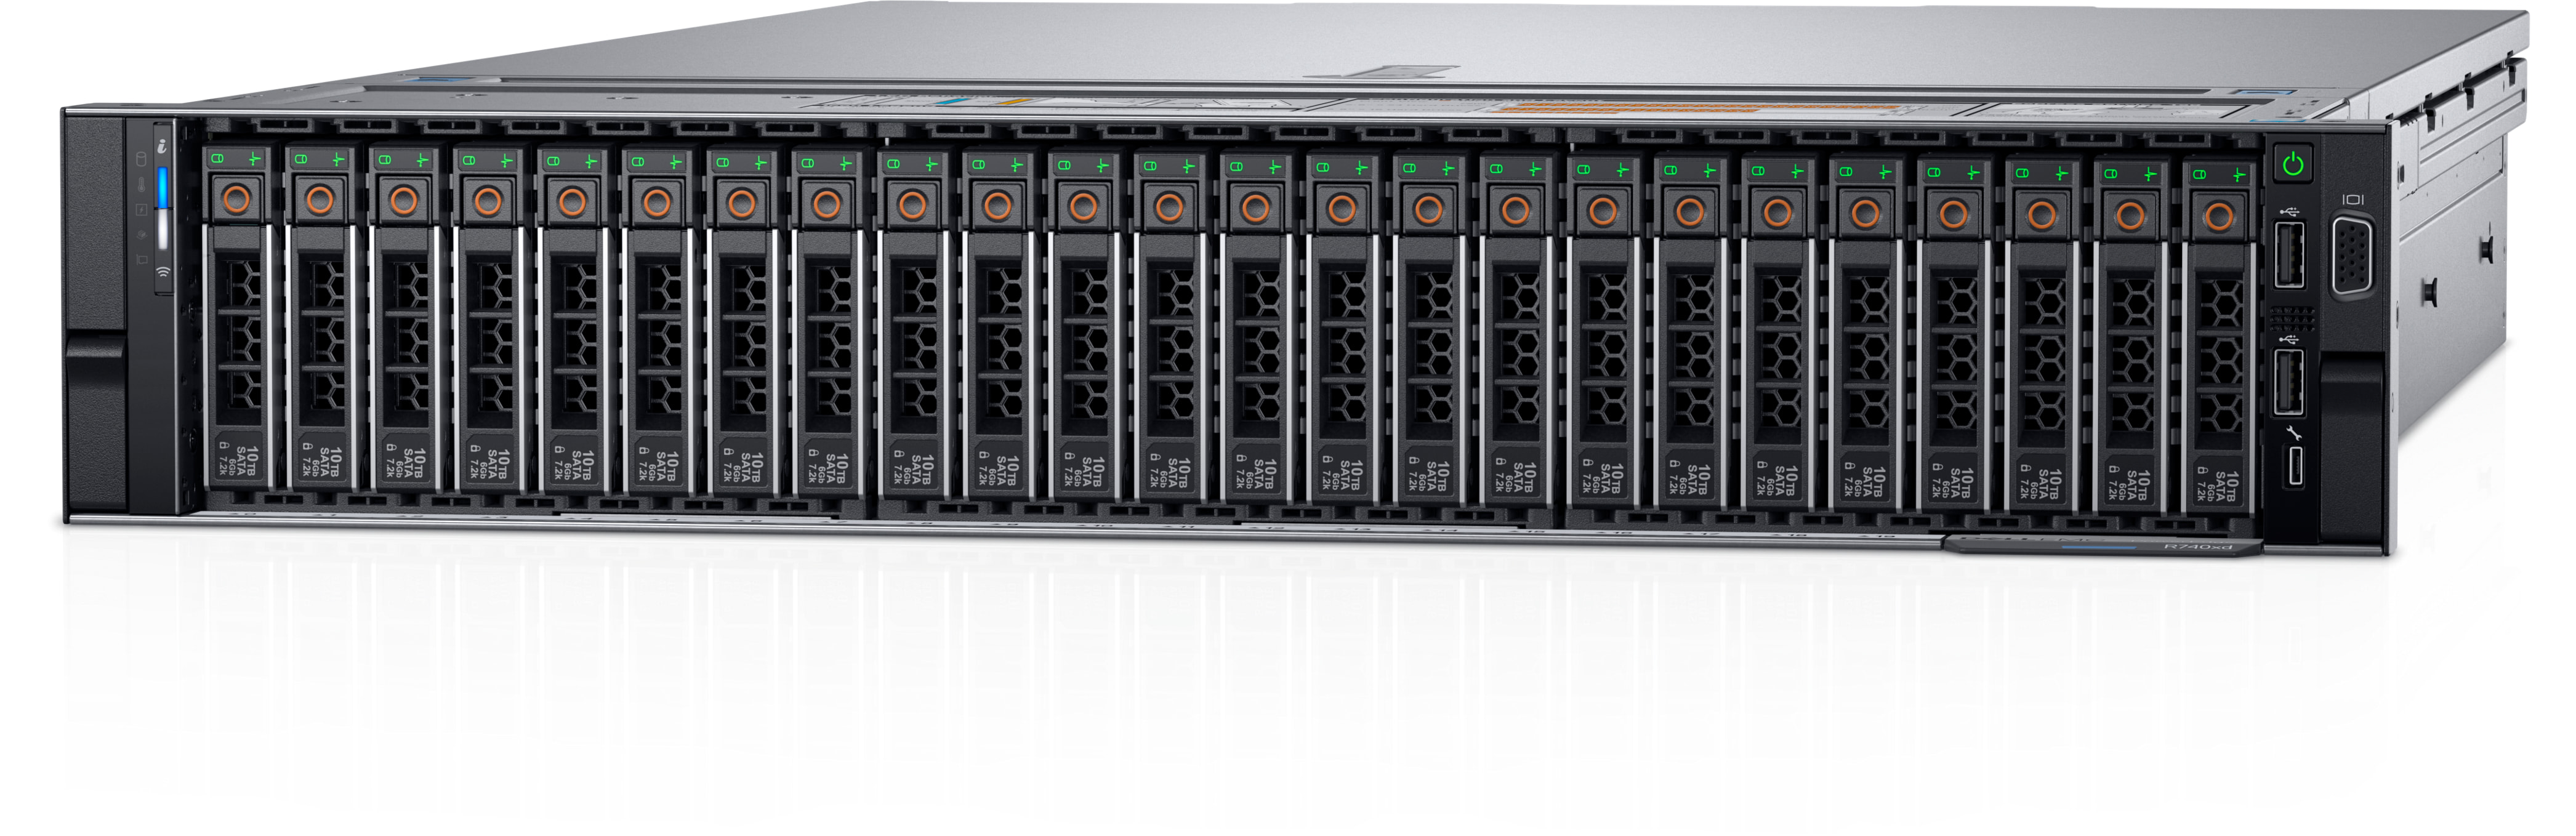 PowerEdge R740xd Rack Server | Dell USA